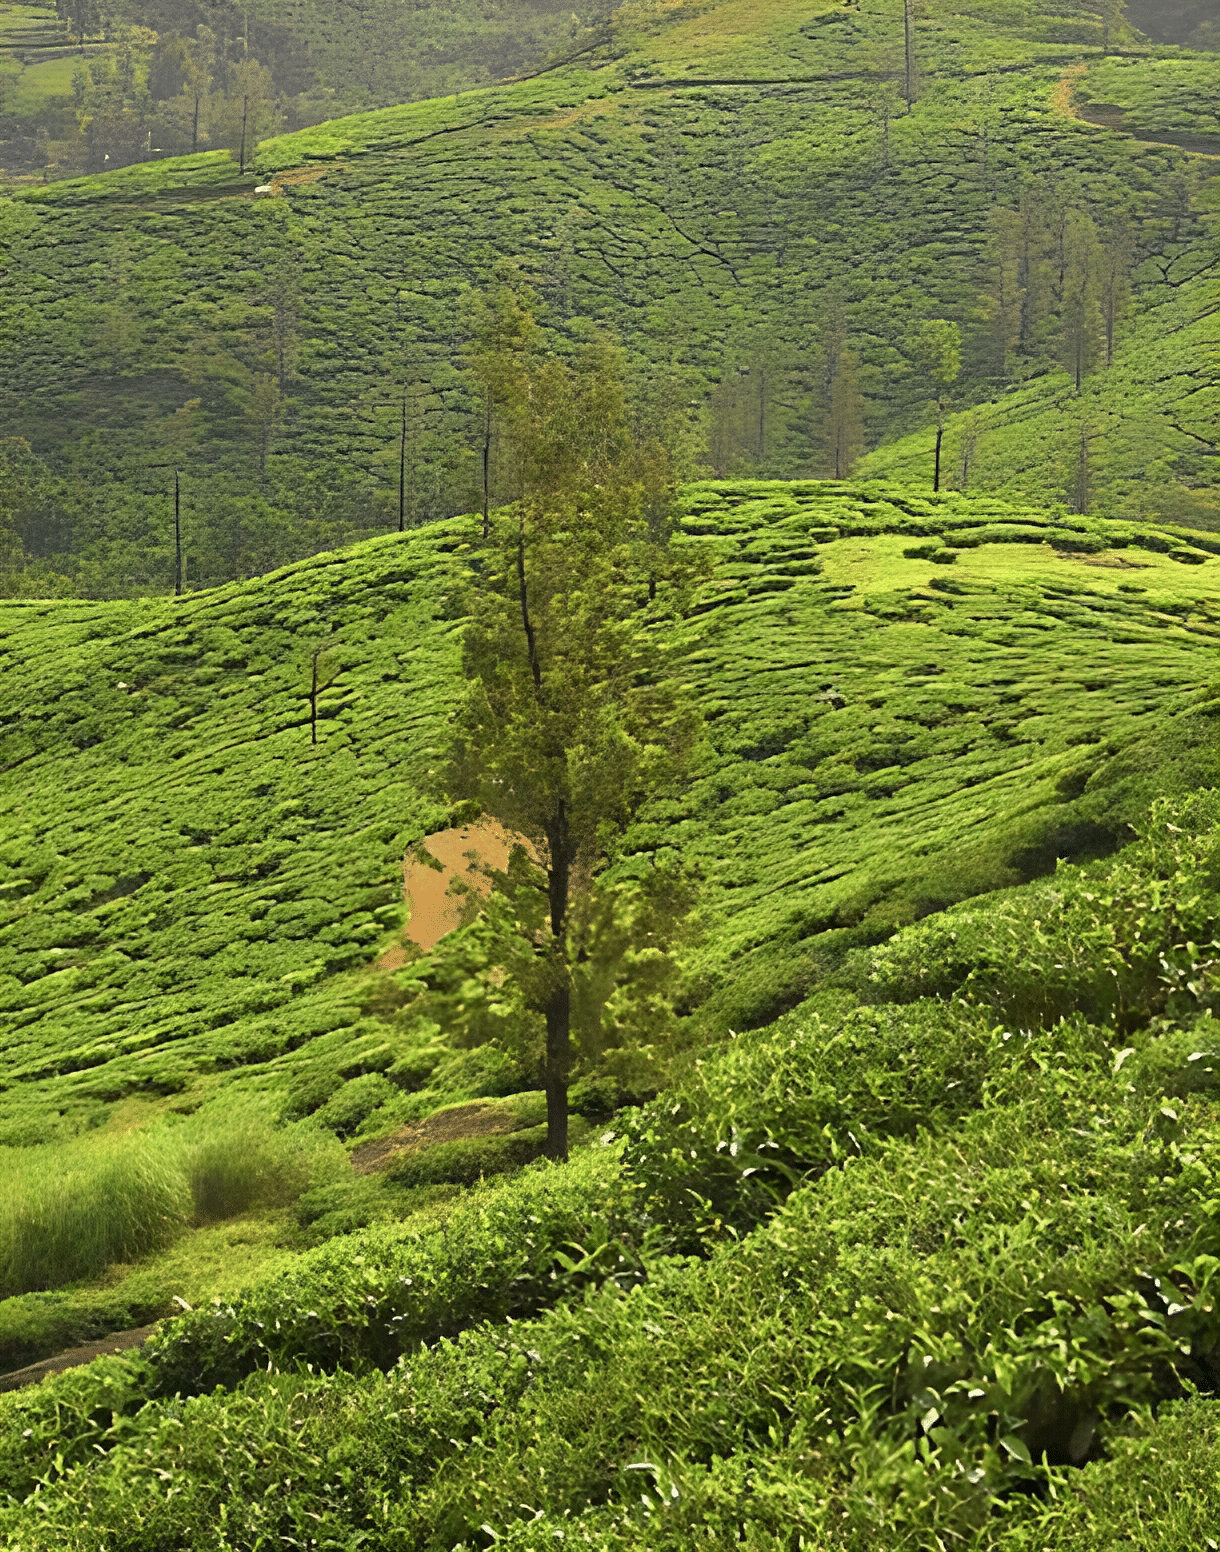 Hike through the Tea Gardens in the Sugandhagiri Range